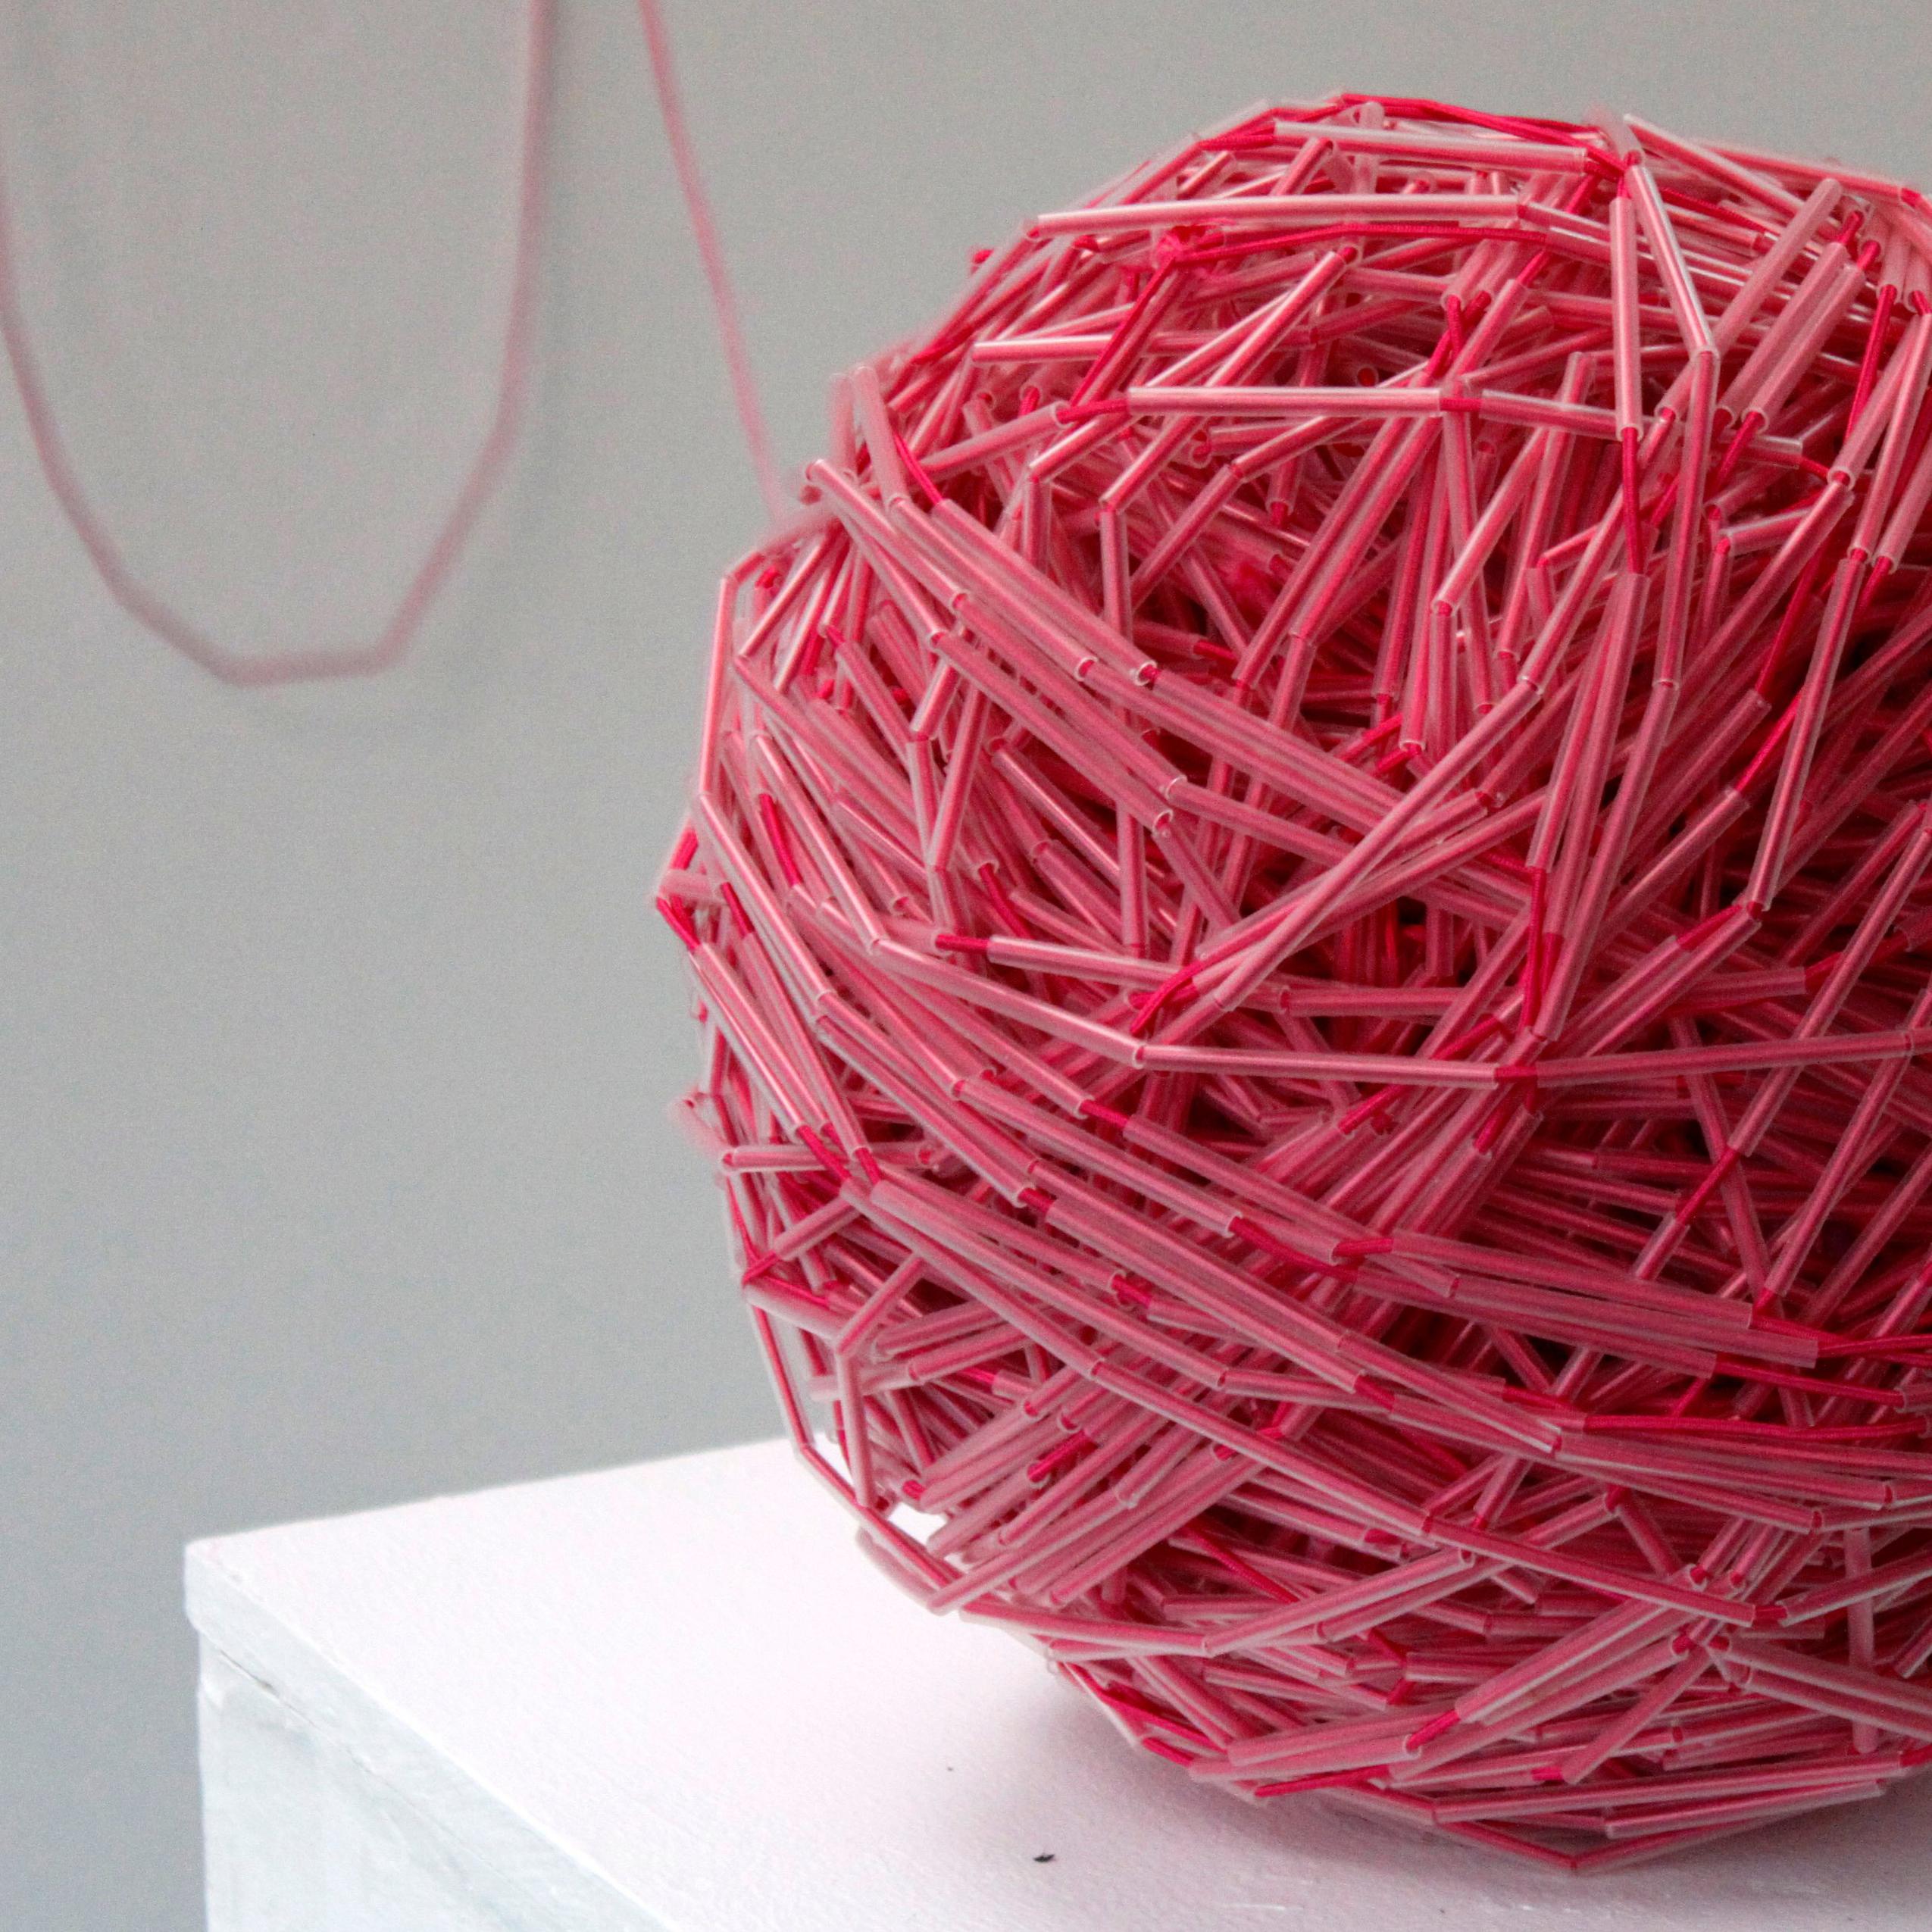 Dreaming Of Knitting - Sculpture by Susan Bleakley